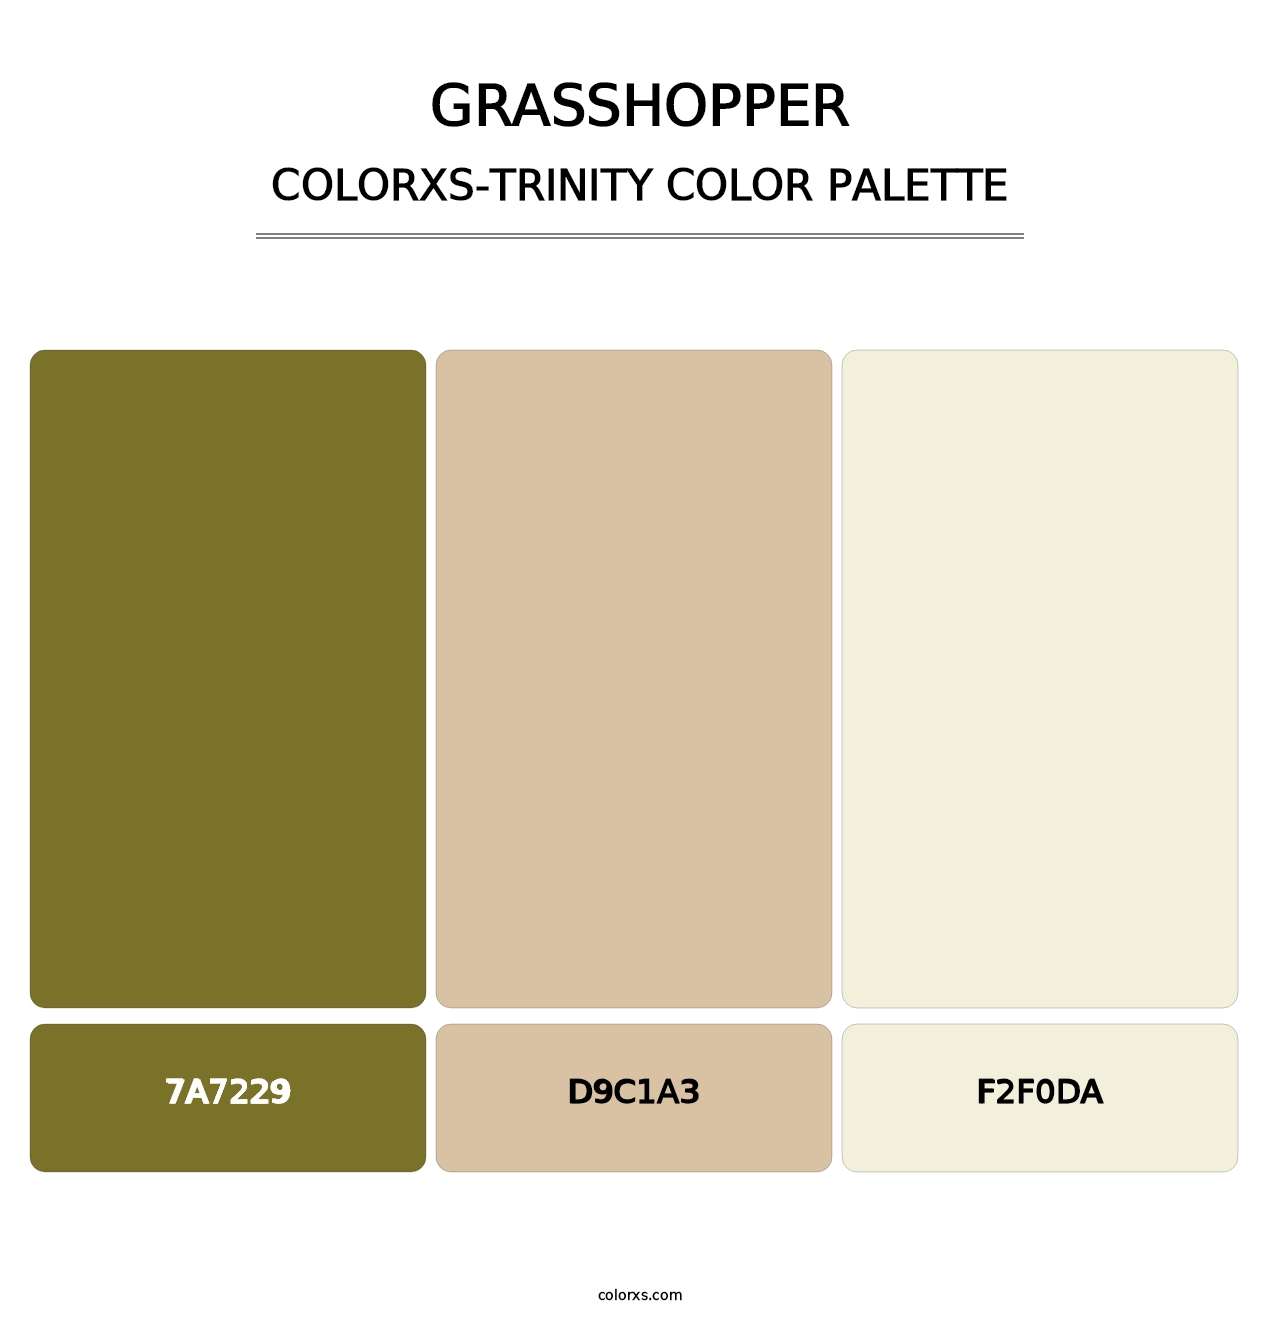 Grasshopper - Colorxs Trinity Palette